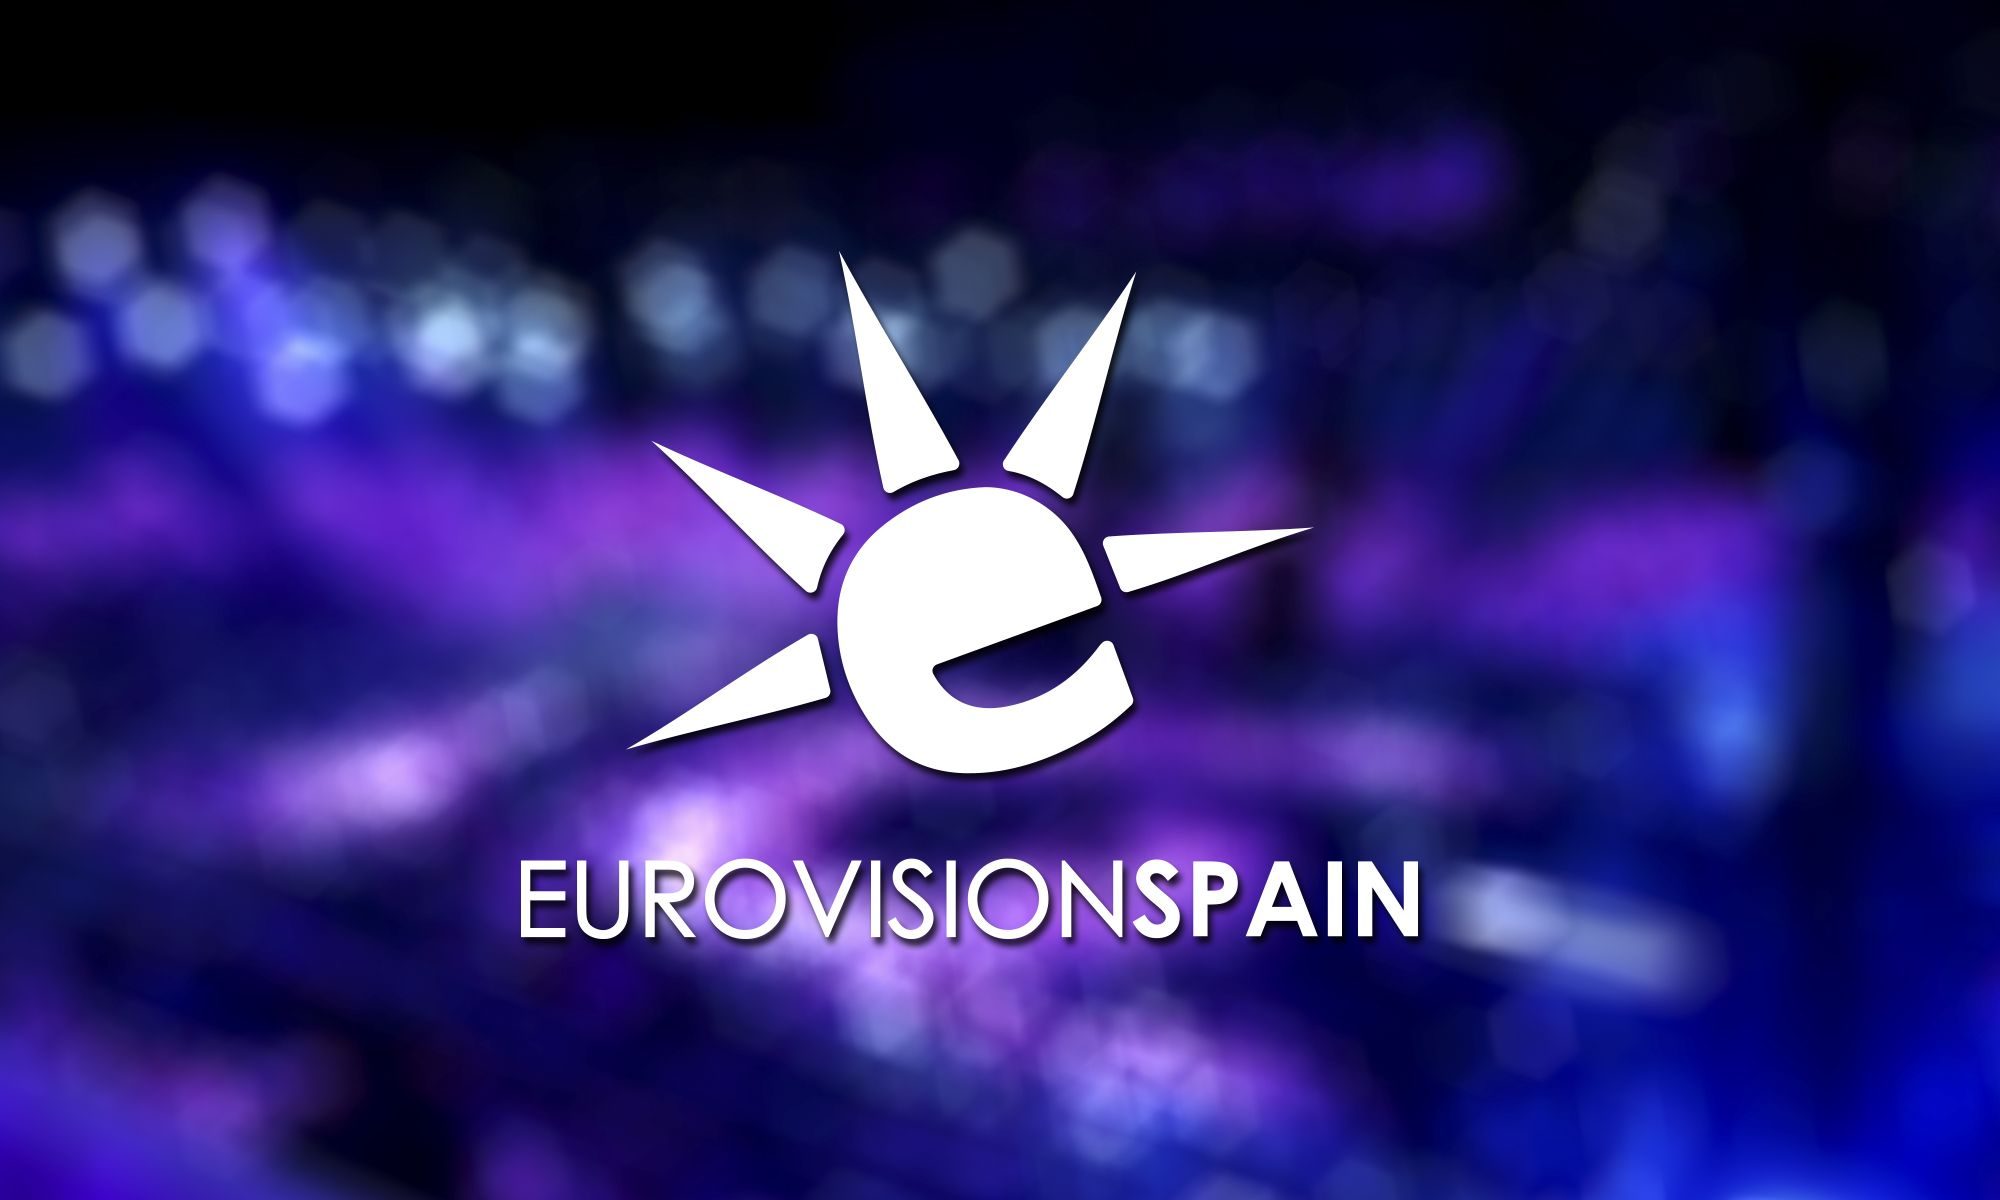 sin_ano_30122014_033432_logo_eurovisionspain_grande-2